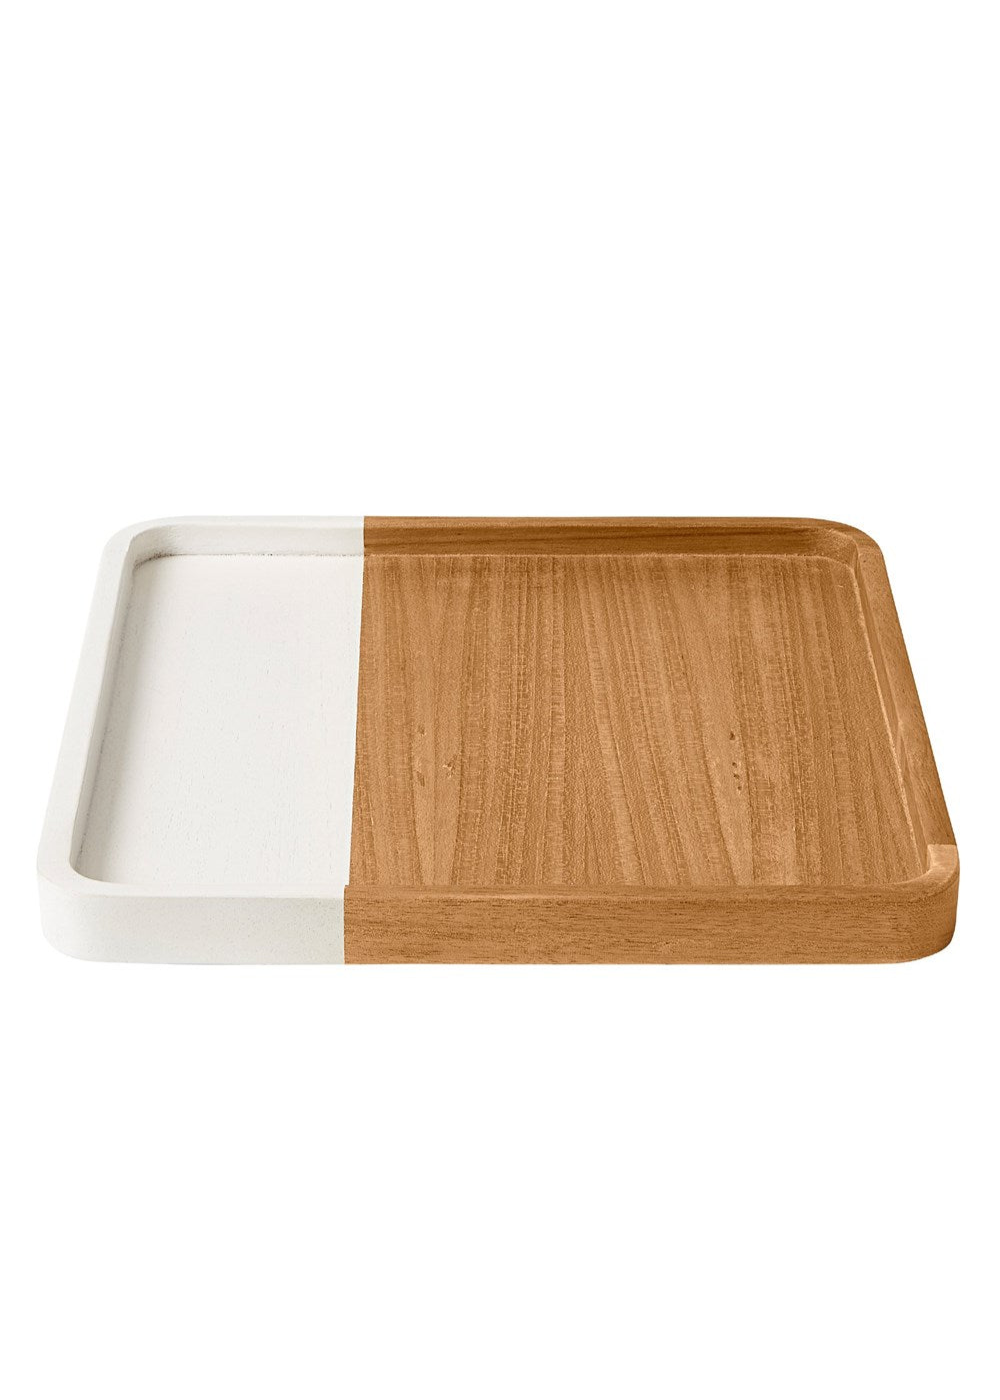 marley display tray timber/white